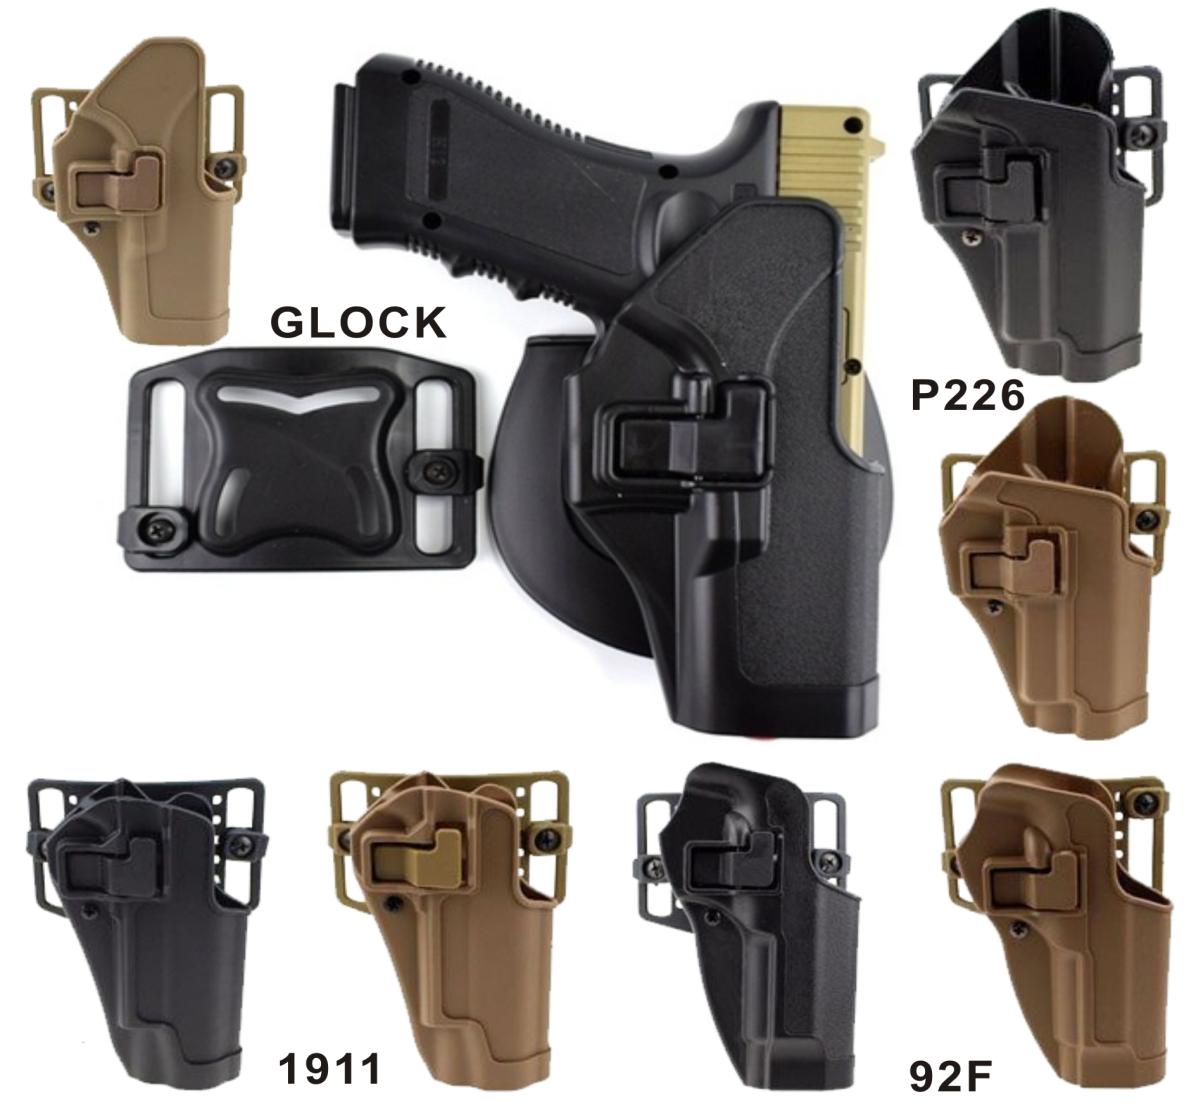 

High quality hard shell pistol holster 1911 G17 p226 92F 4 models Hidden gun holster Black Khaki 2 colors Right Hand7860715, Green